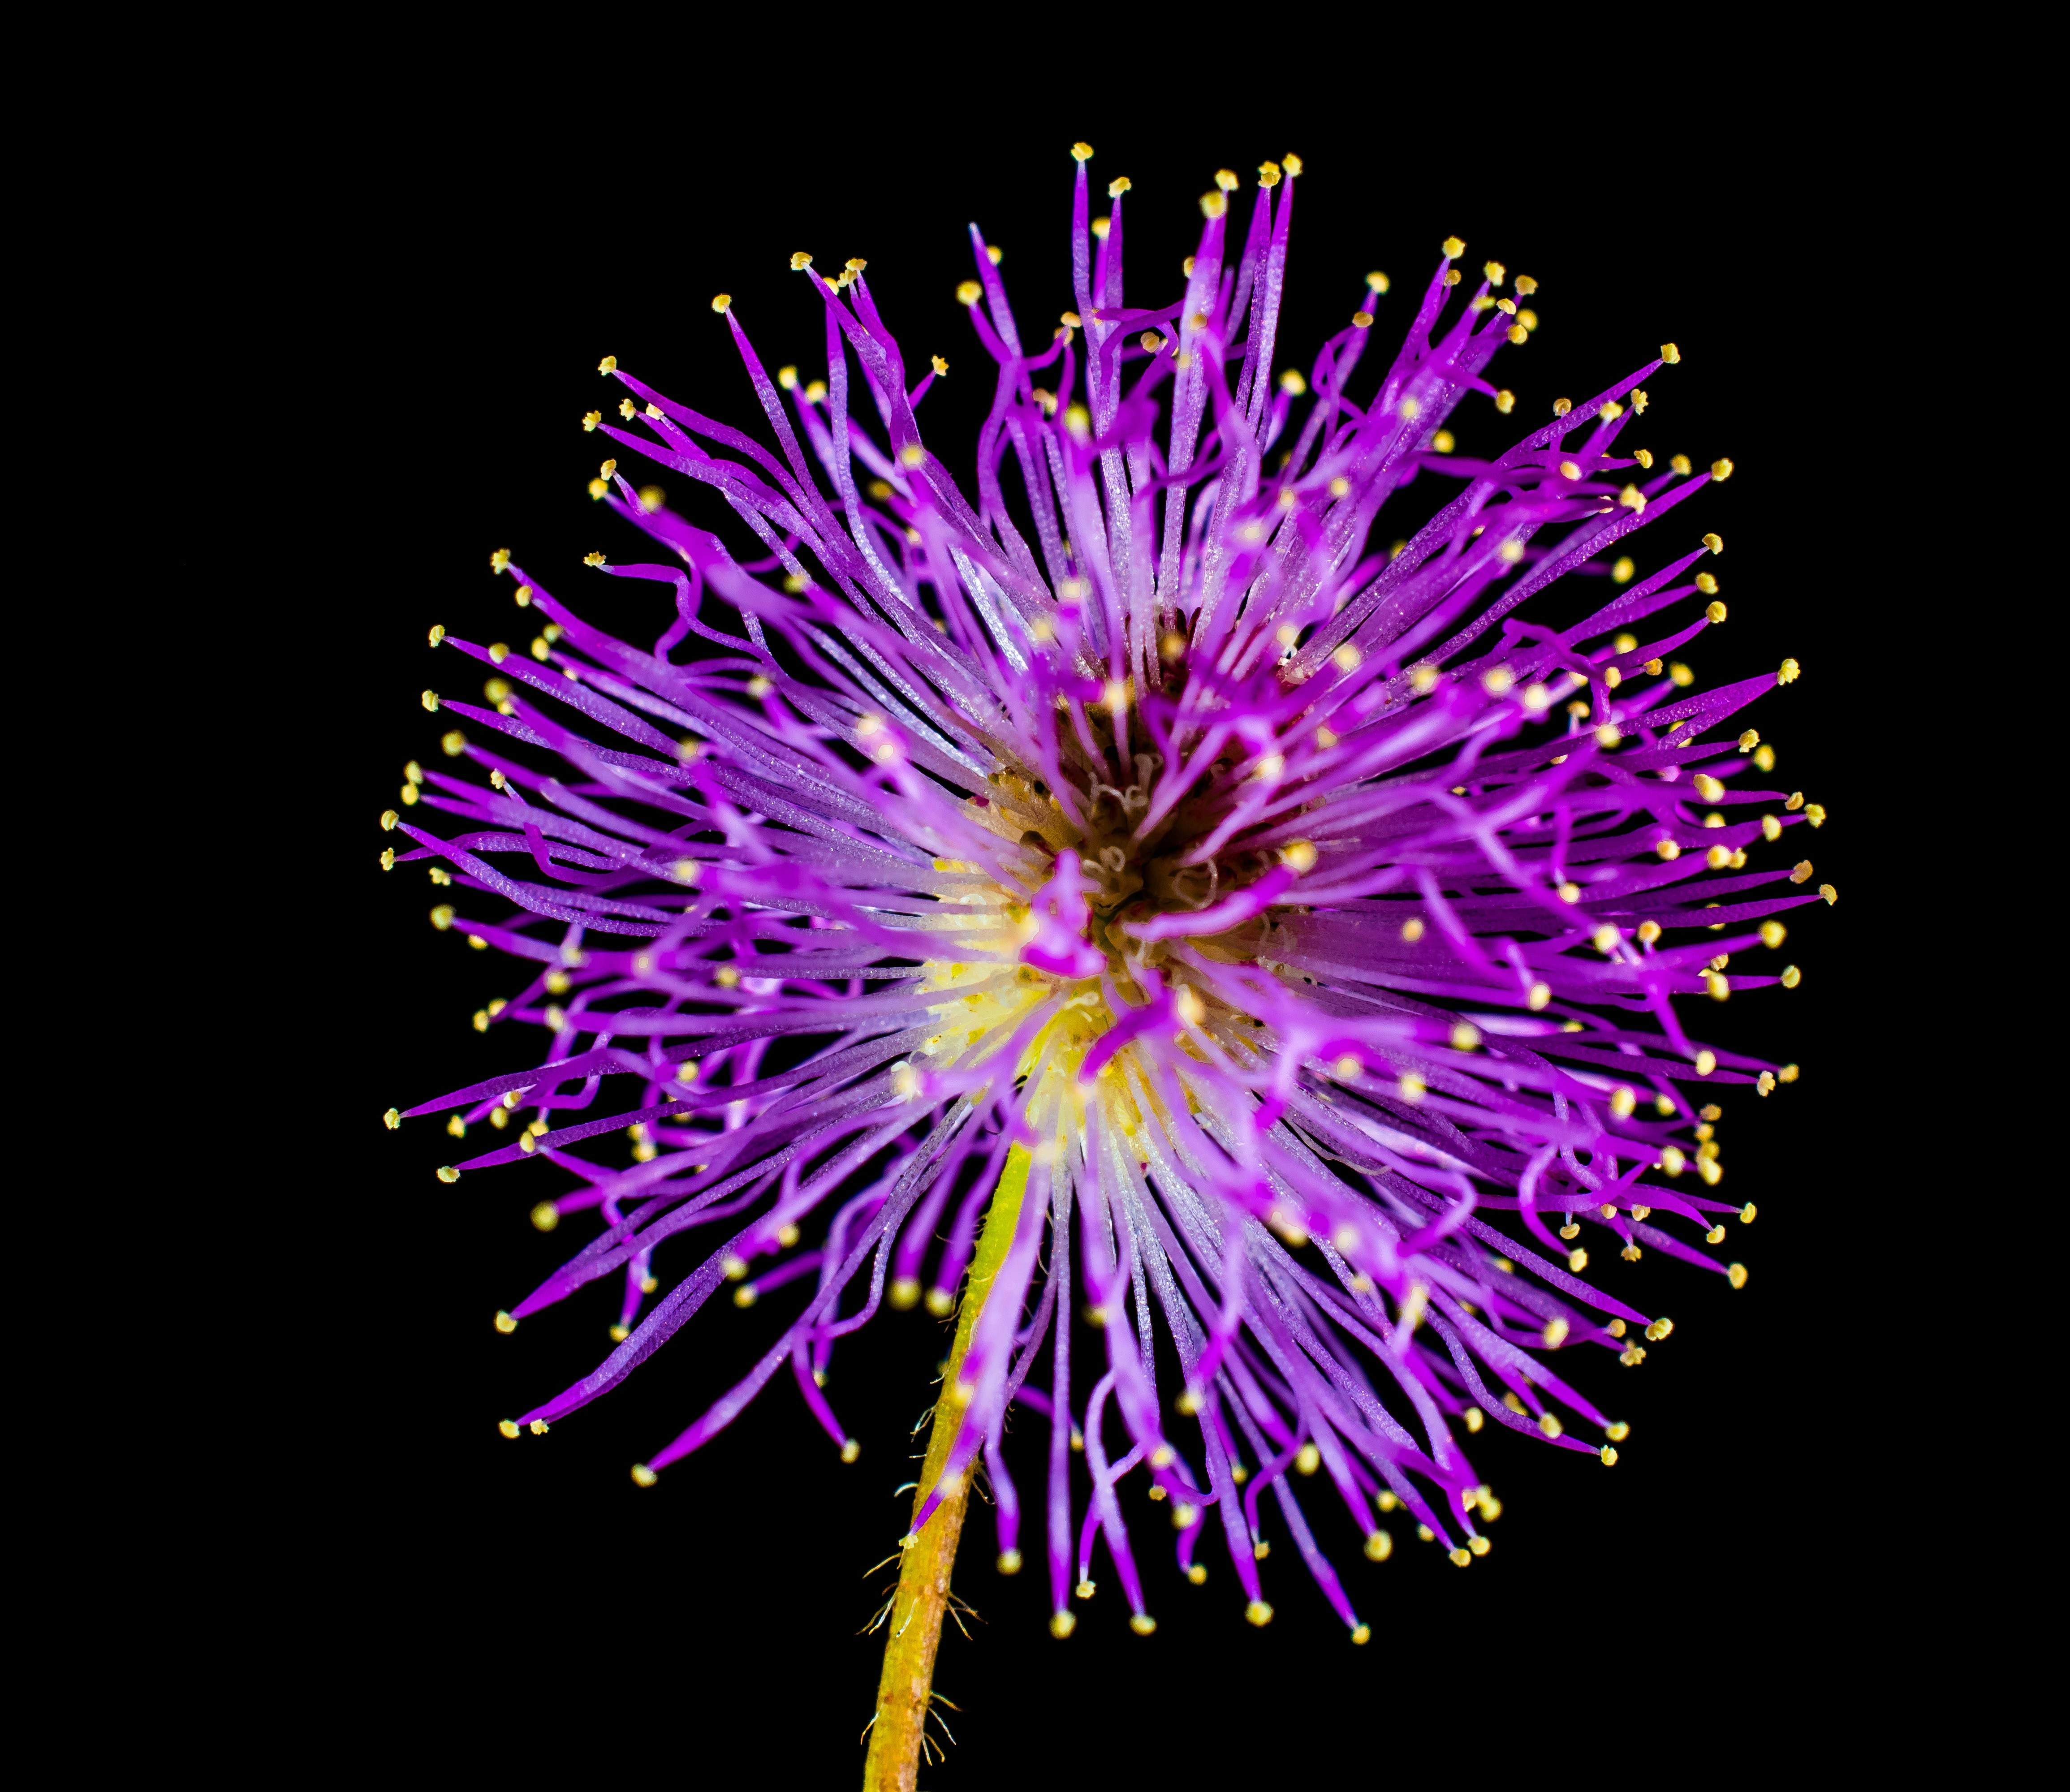 purple dandelion